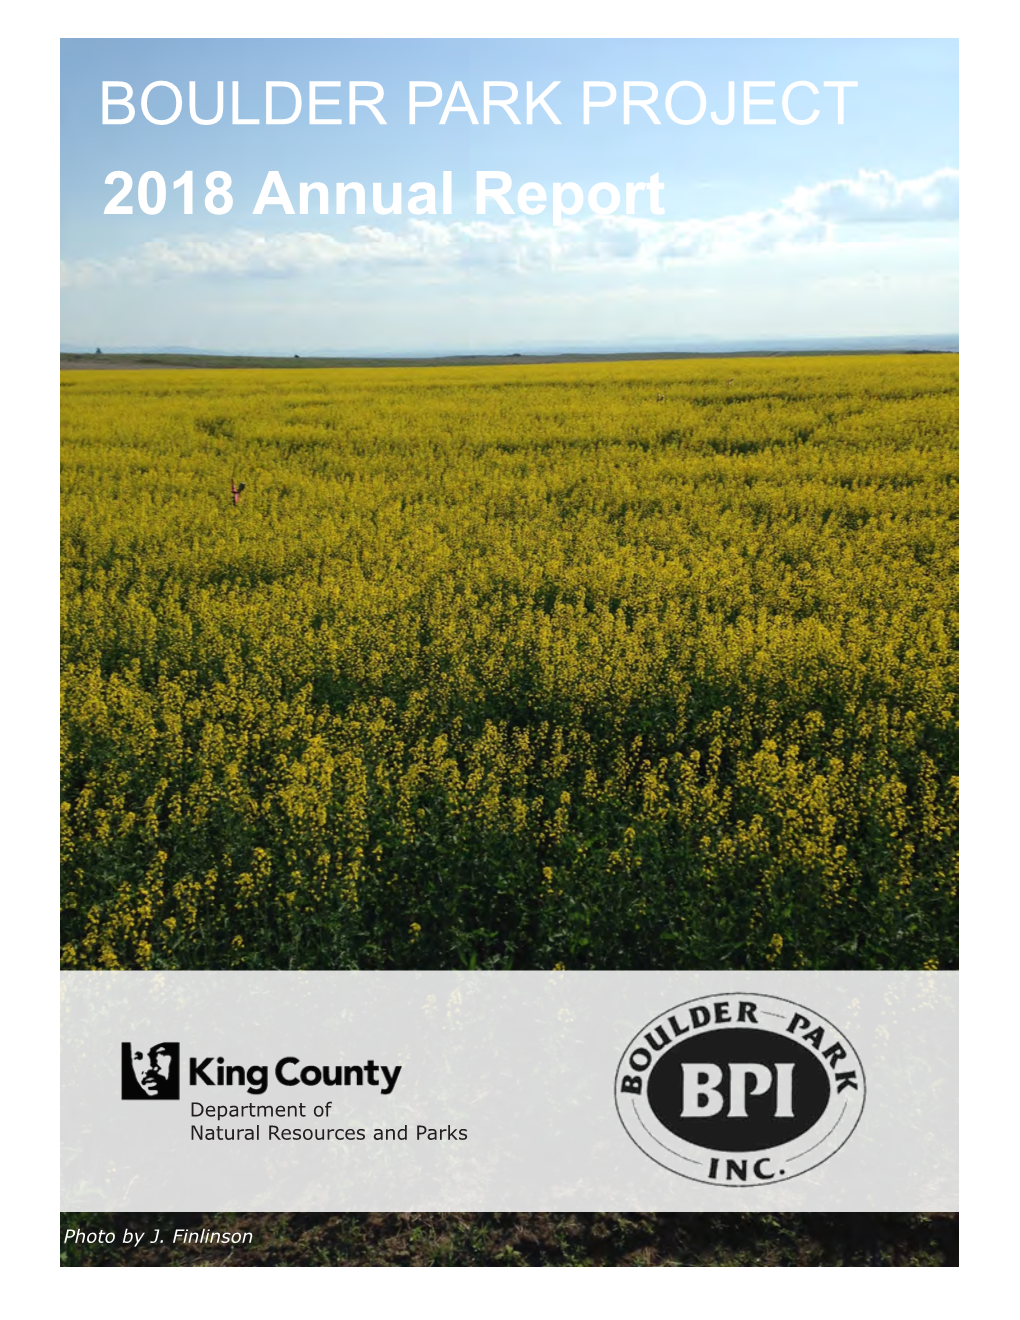 BOULDER PARK PROJECT 2018 Annual Report